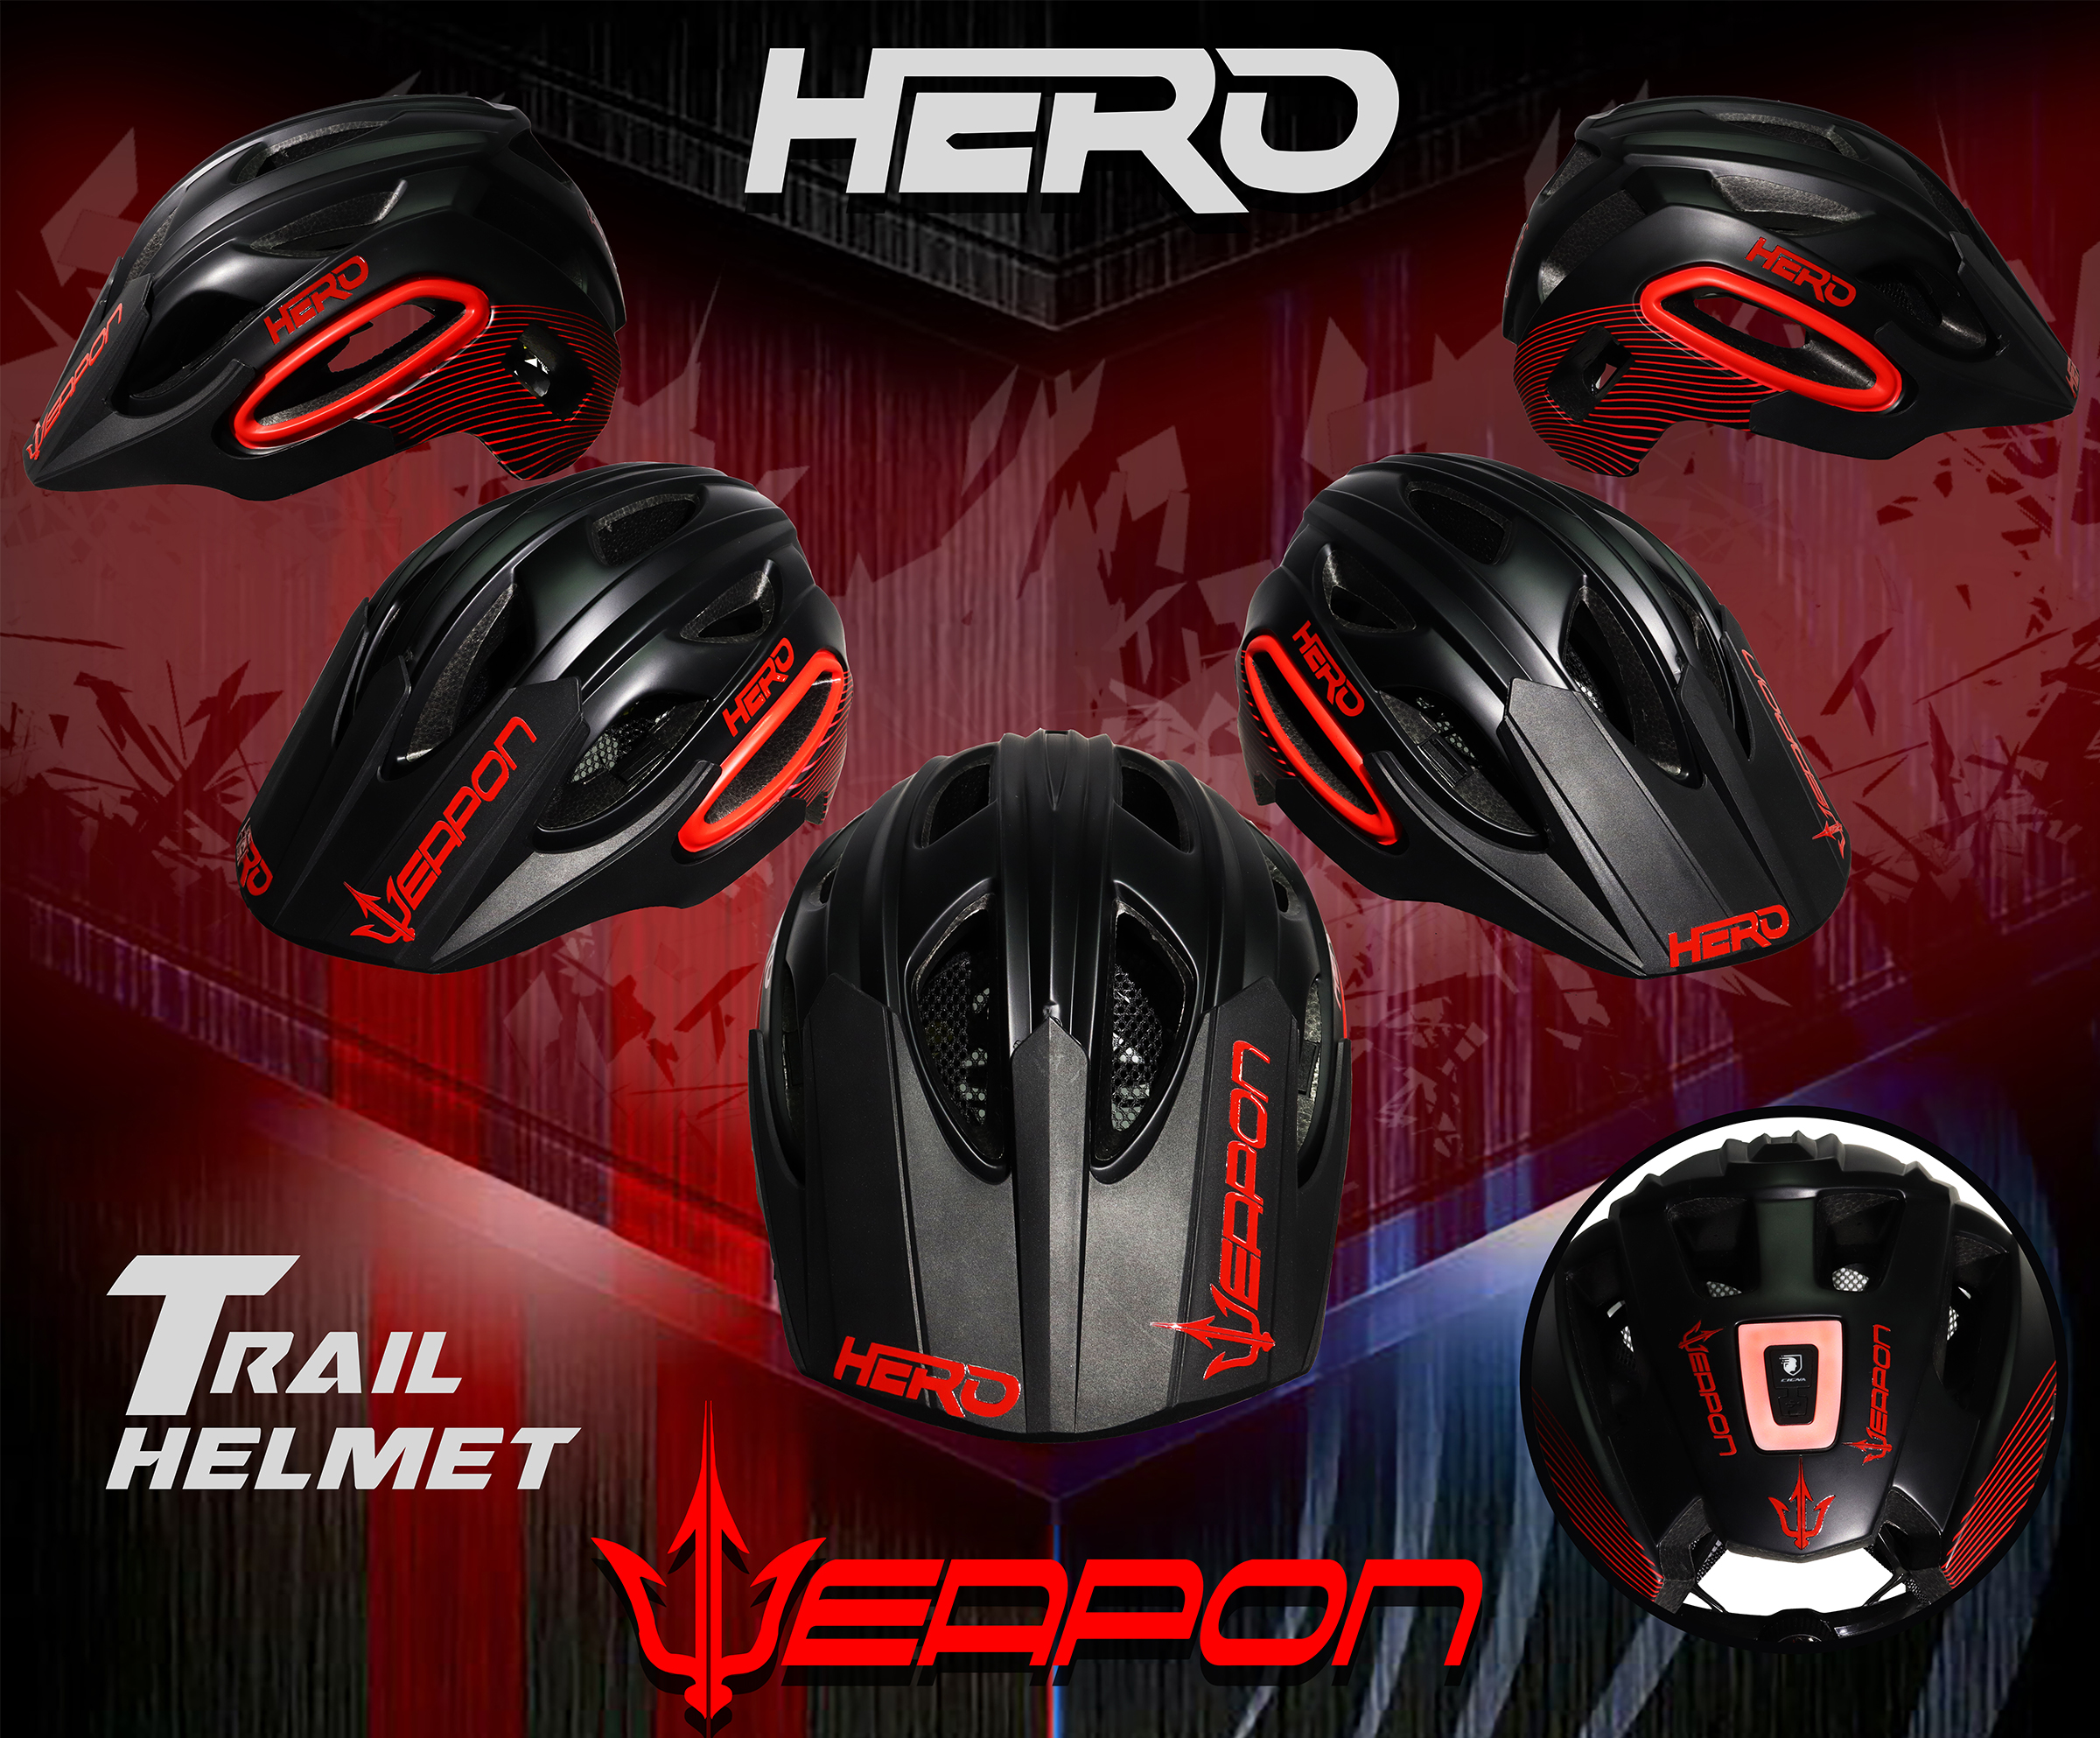 hero-helmet-ads2